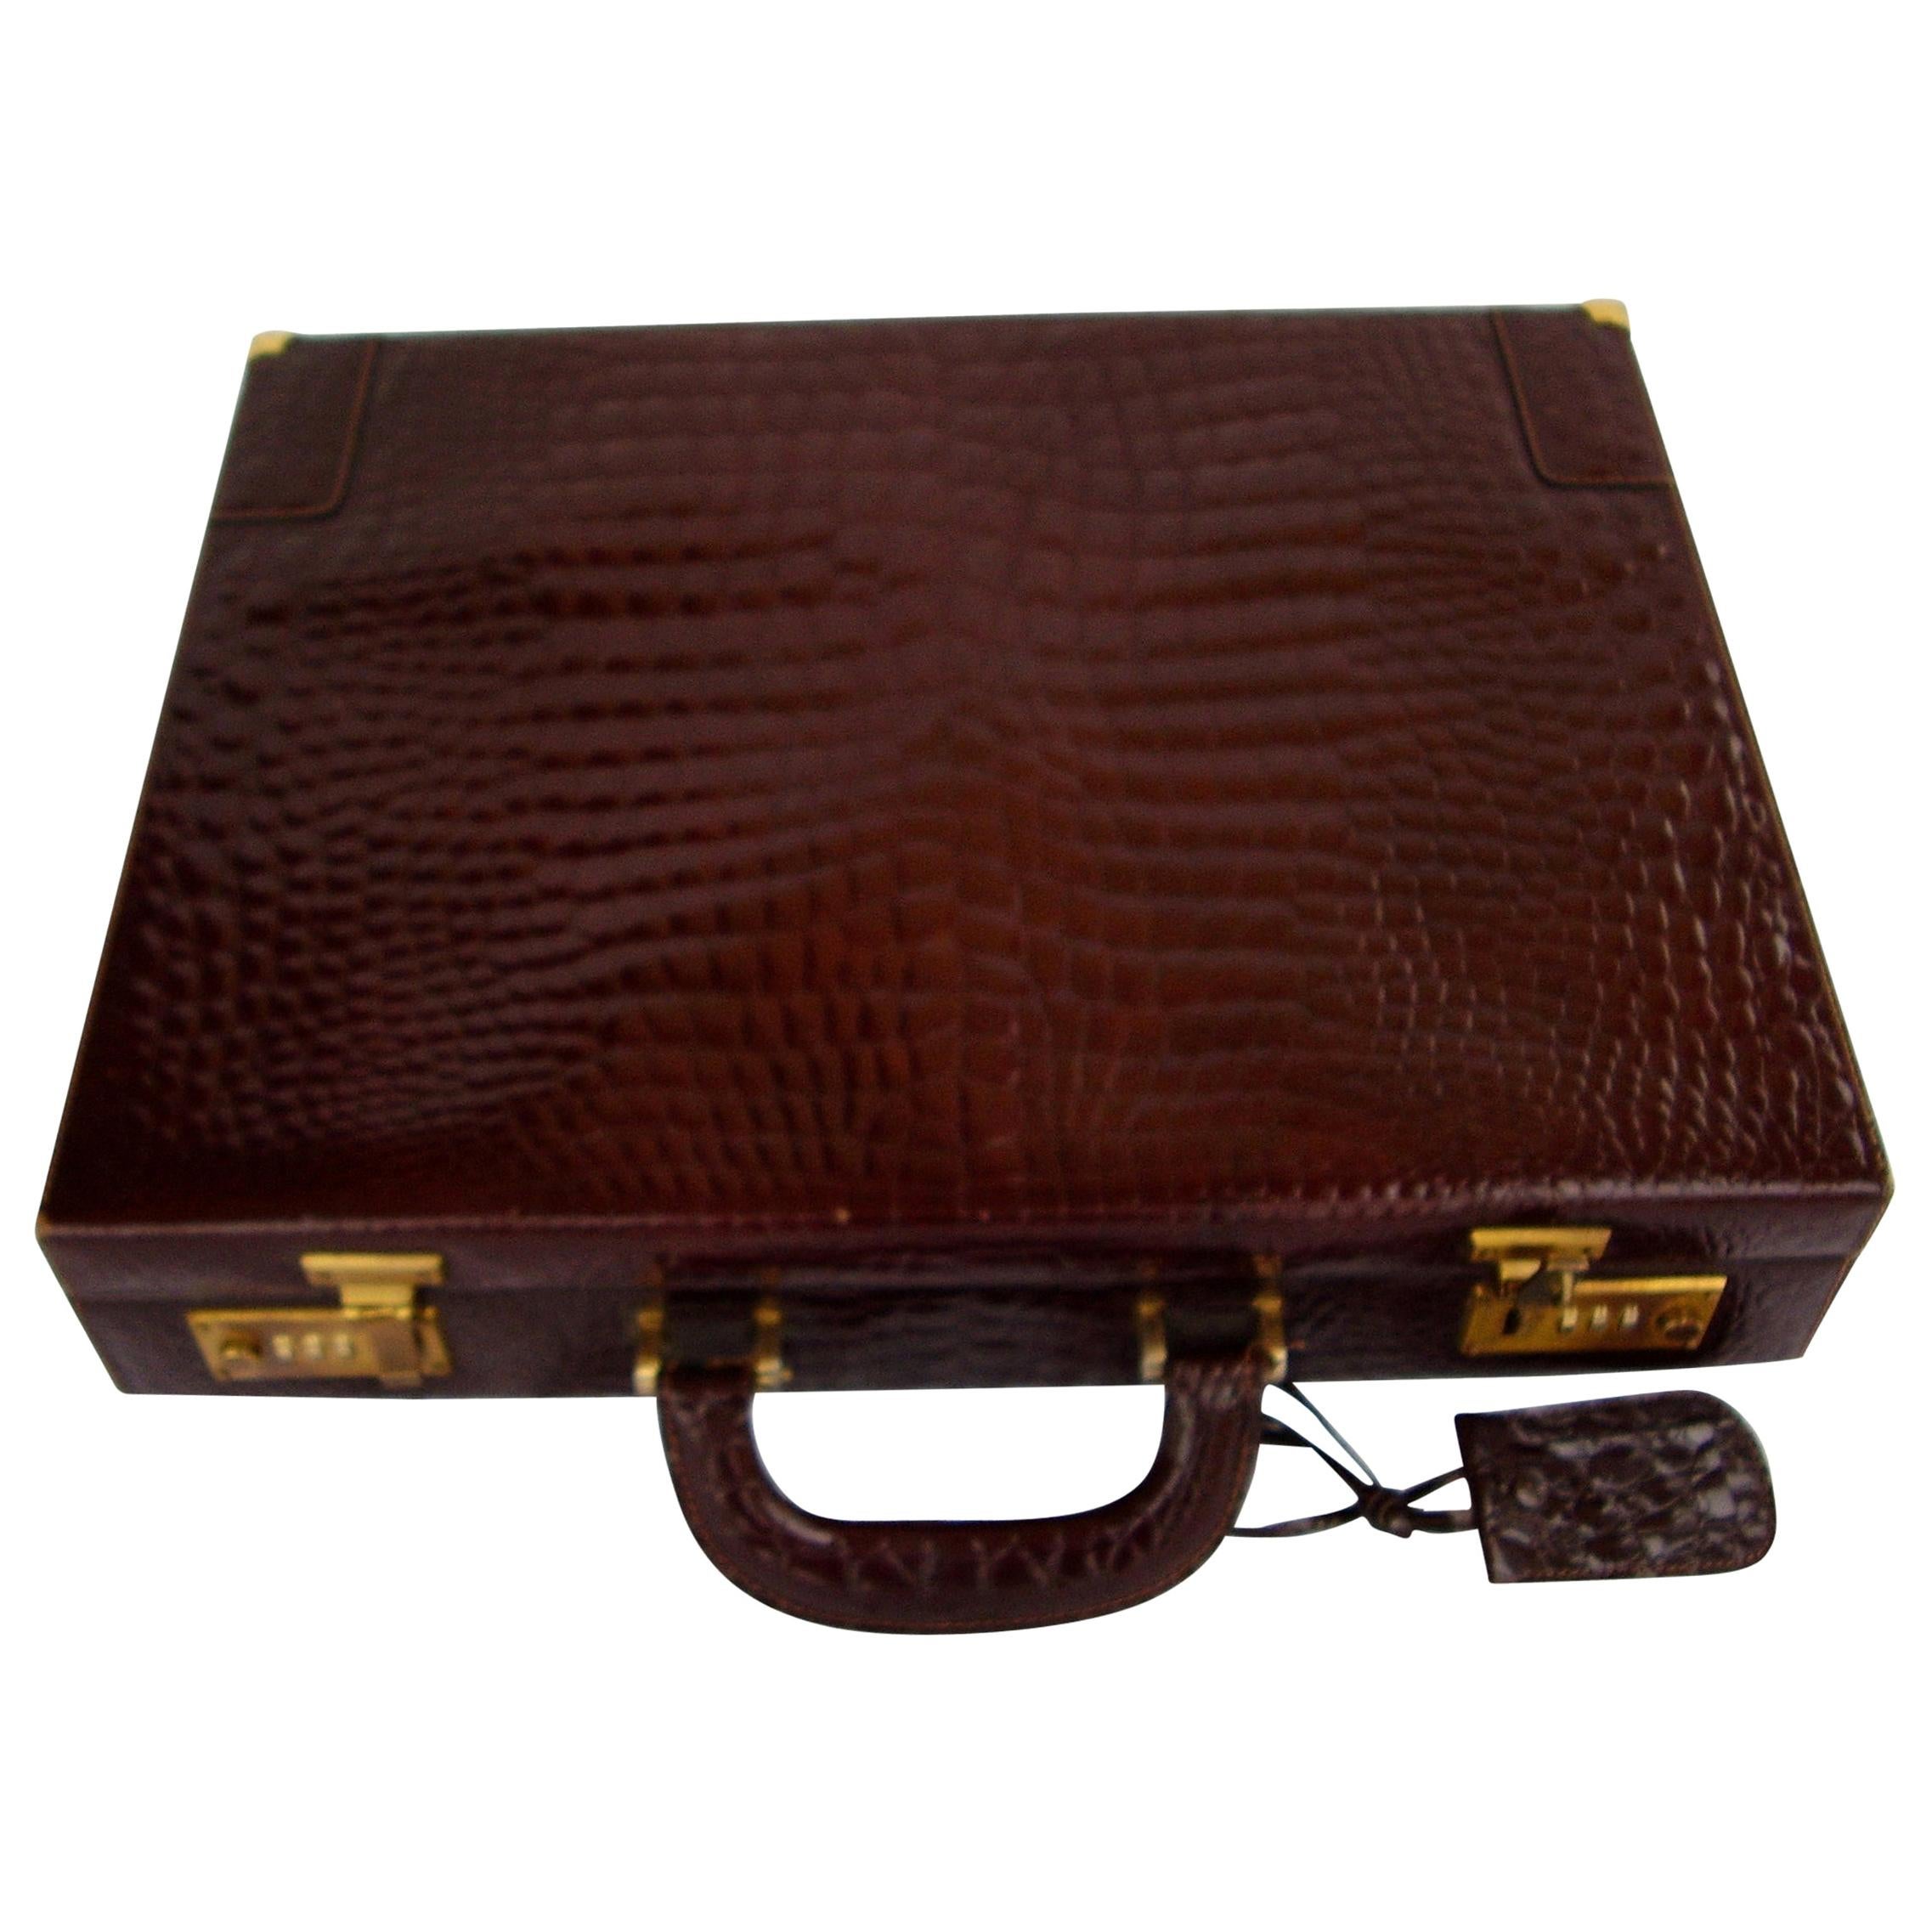 CÉLINE 24-hour Briefcase in Wild Burgundy Brown Crocodile Leather  For Sale